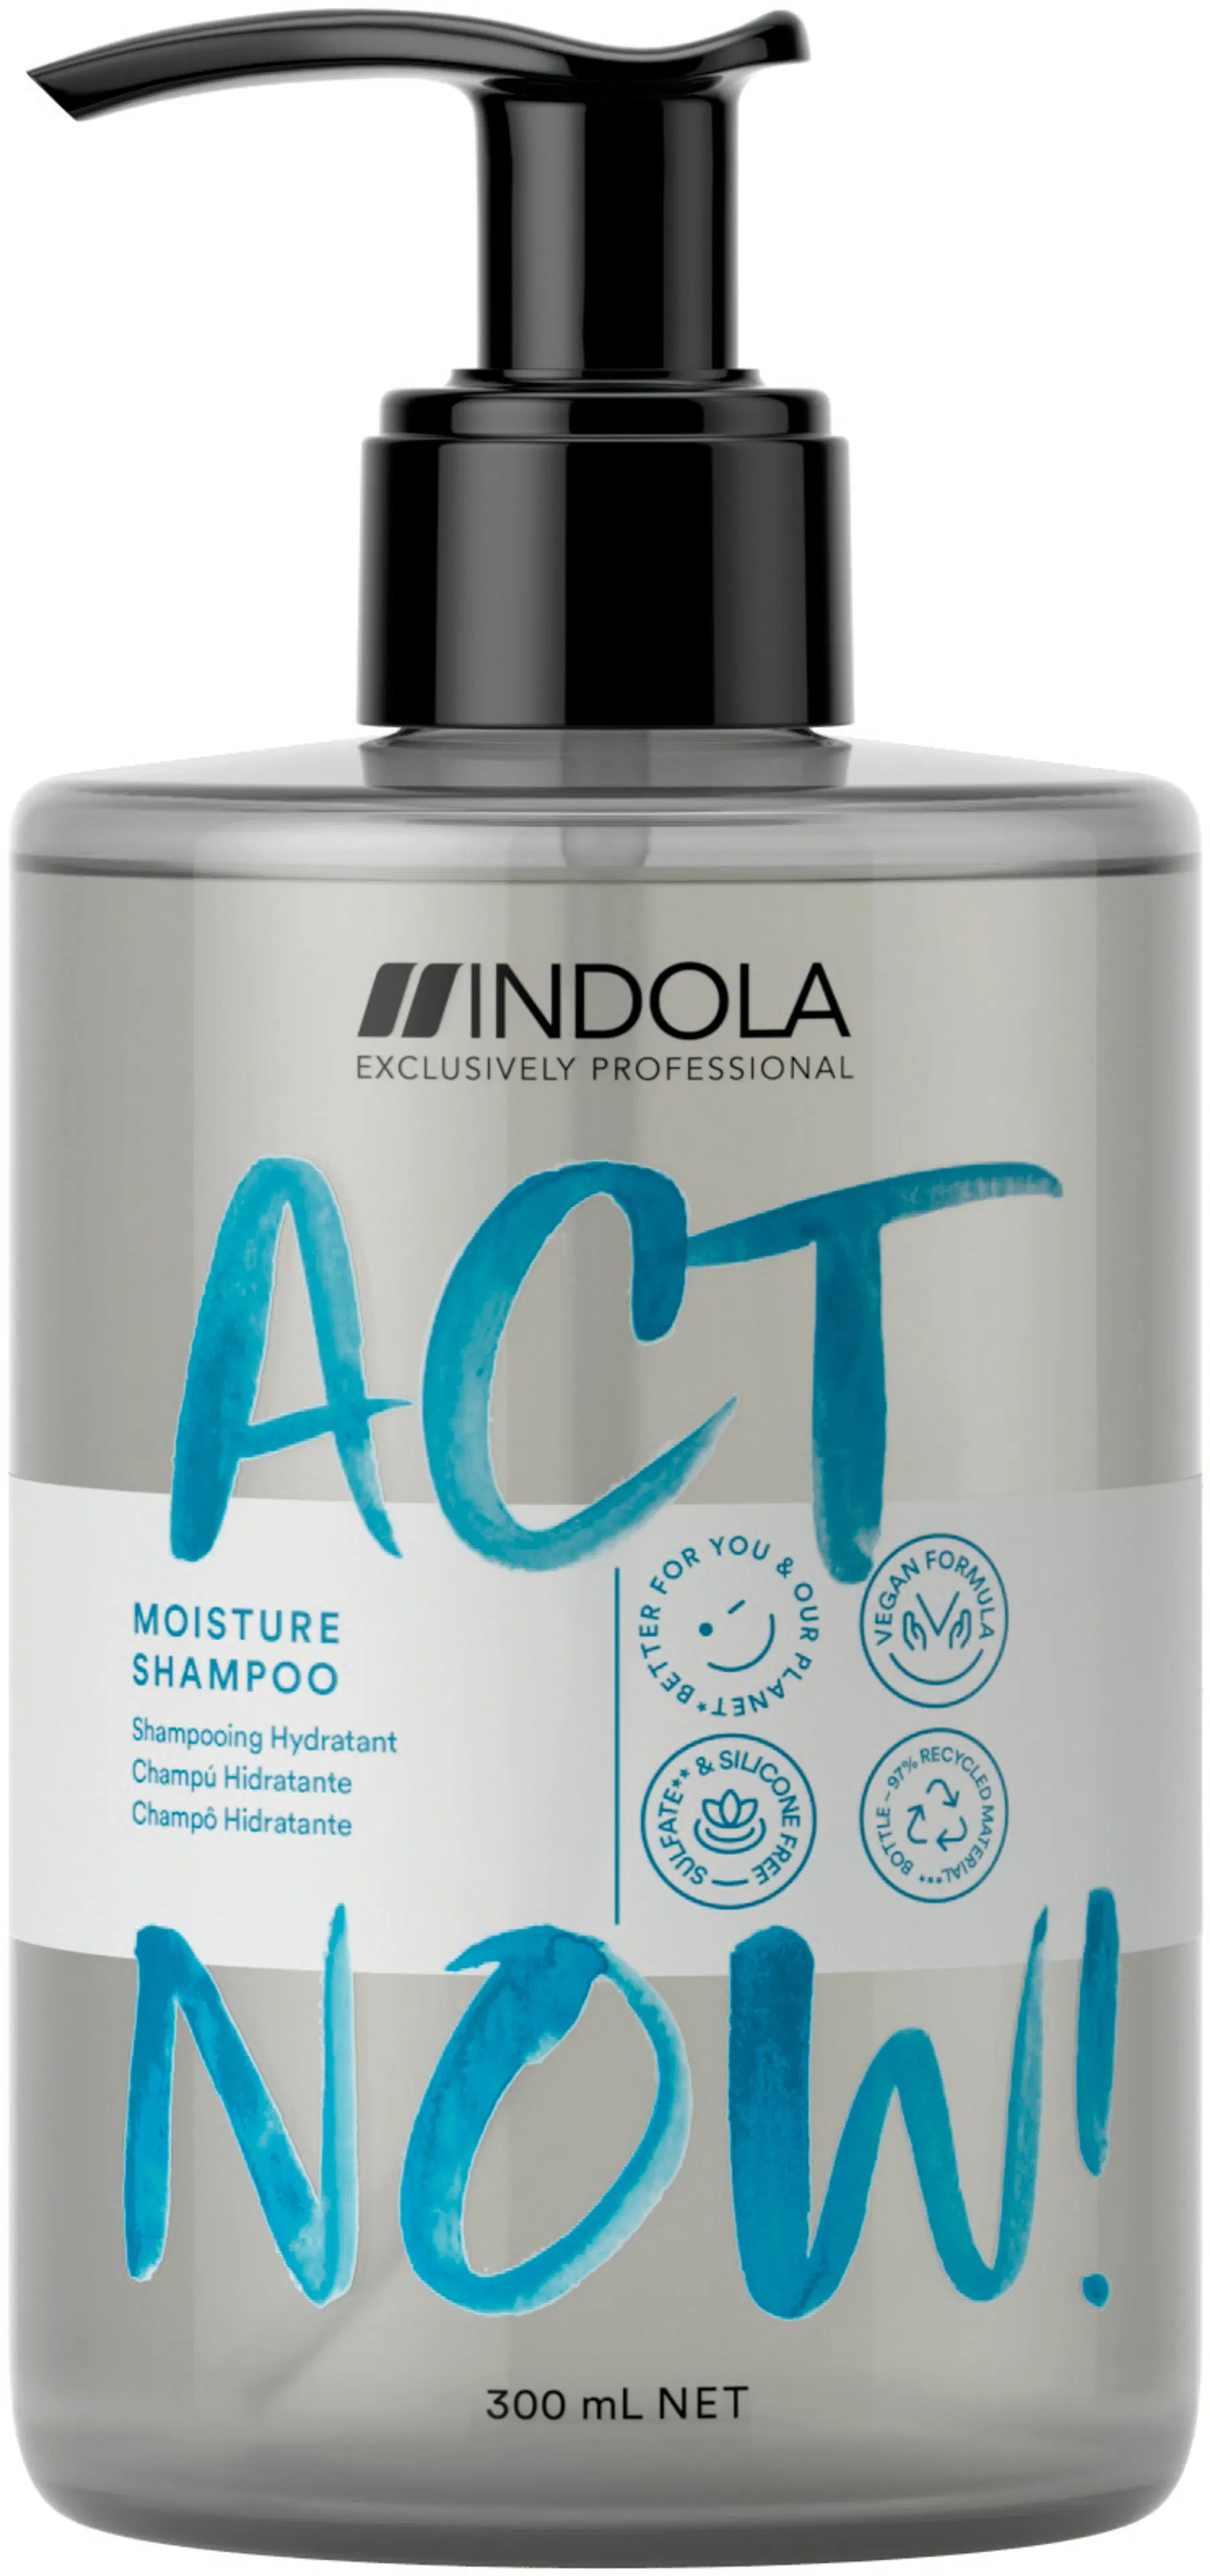 ACT NOW! Moisture Shampoo 300 ml